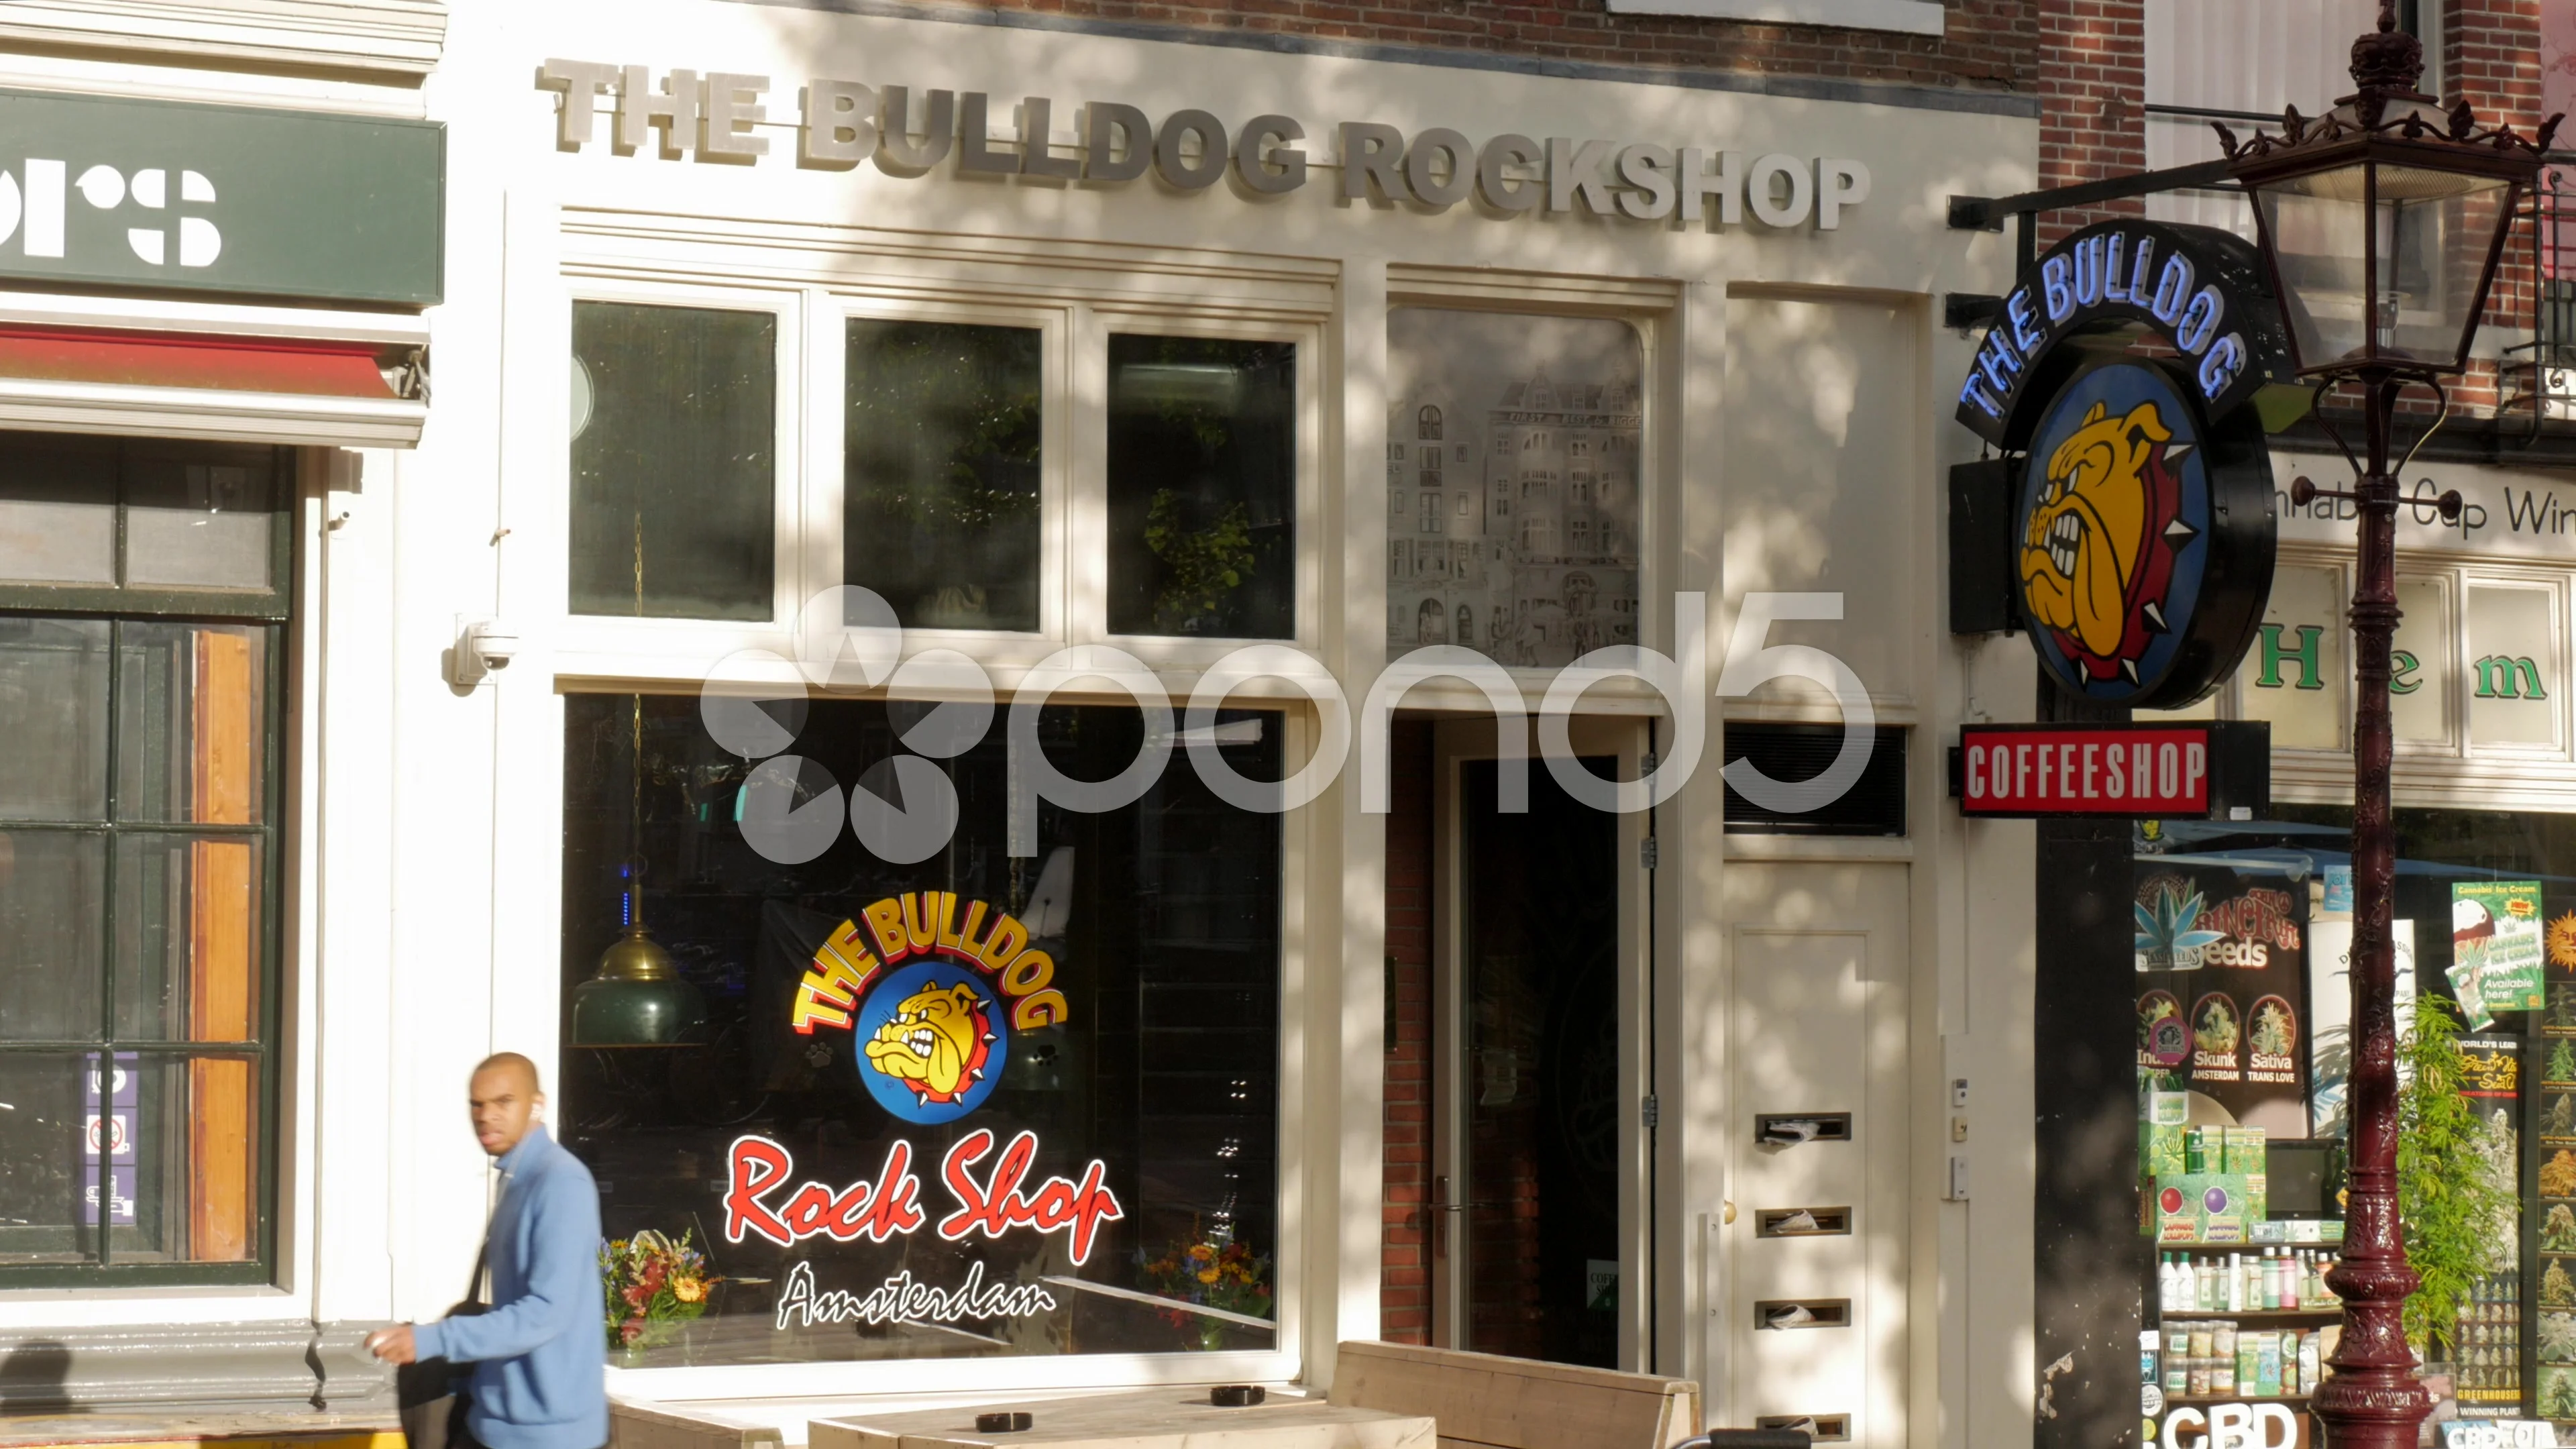 The bulldog amsterdam coffeeshop -Fotos und -Bildmaterial in hoher